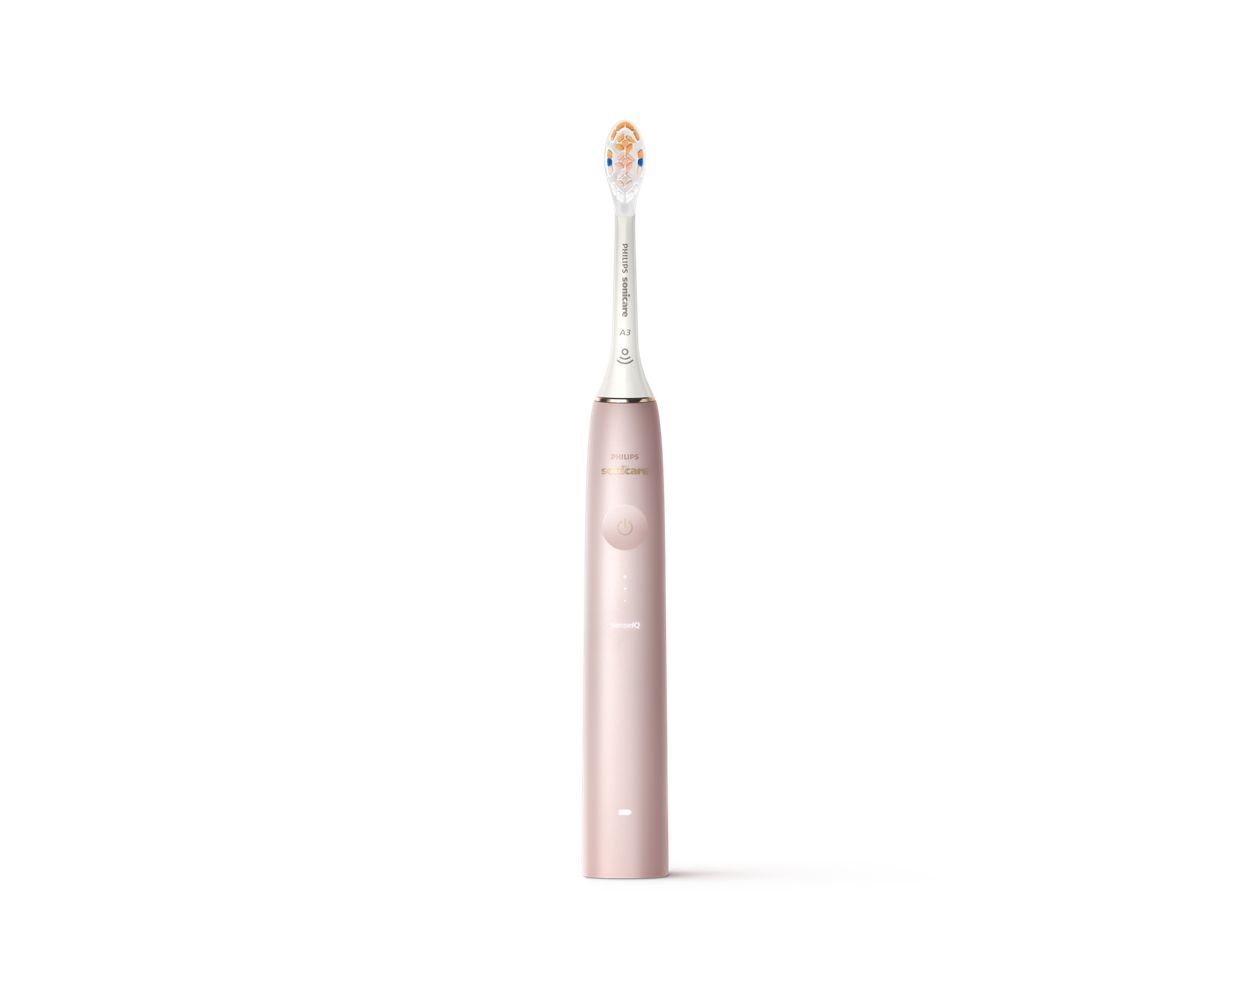 Prestige 9900 Power Toothbrush with SenseIQ HX9990/13 | Sonicare